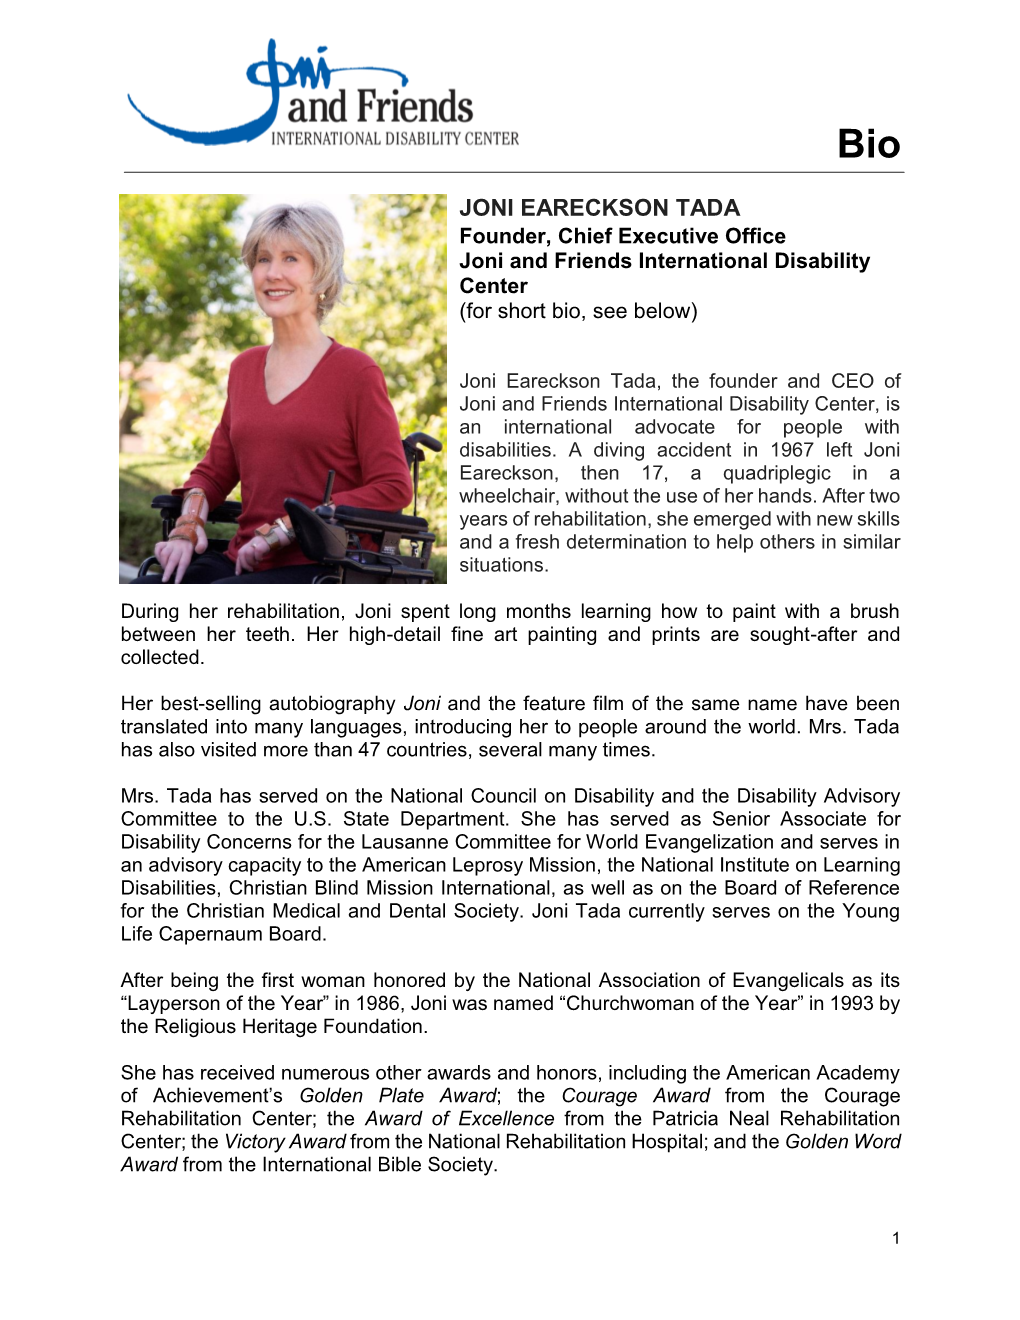 Joni Eareckson Tada Biography